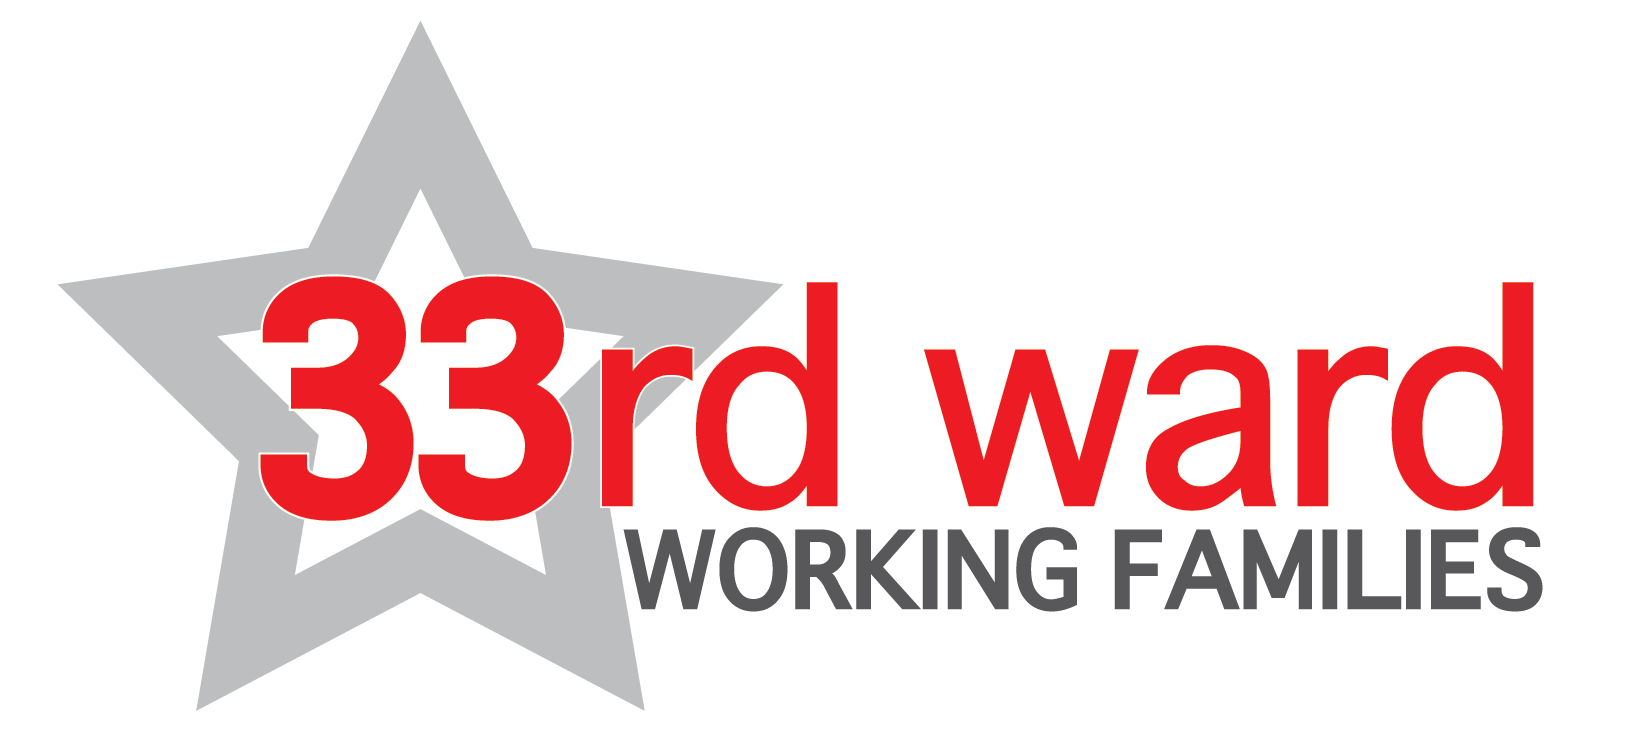 33rd Ward Working Families logo